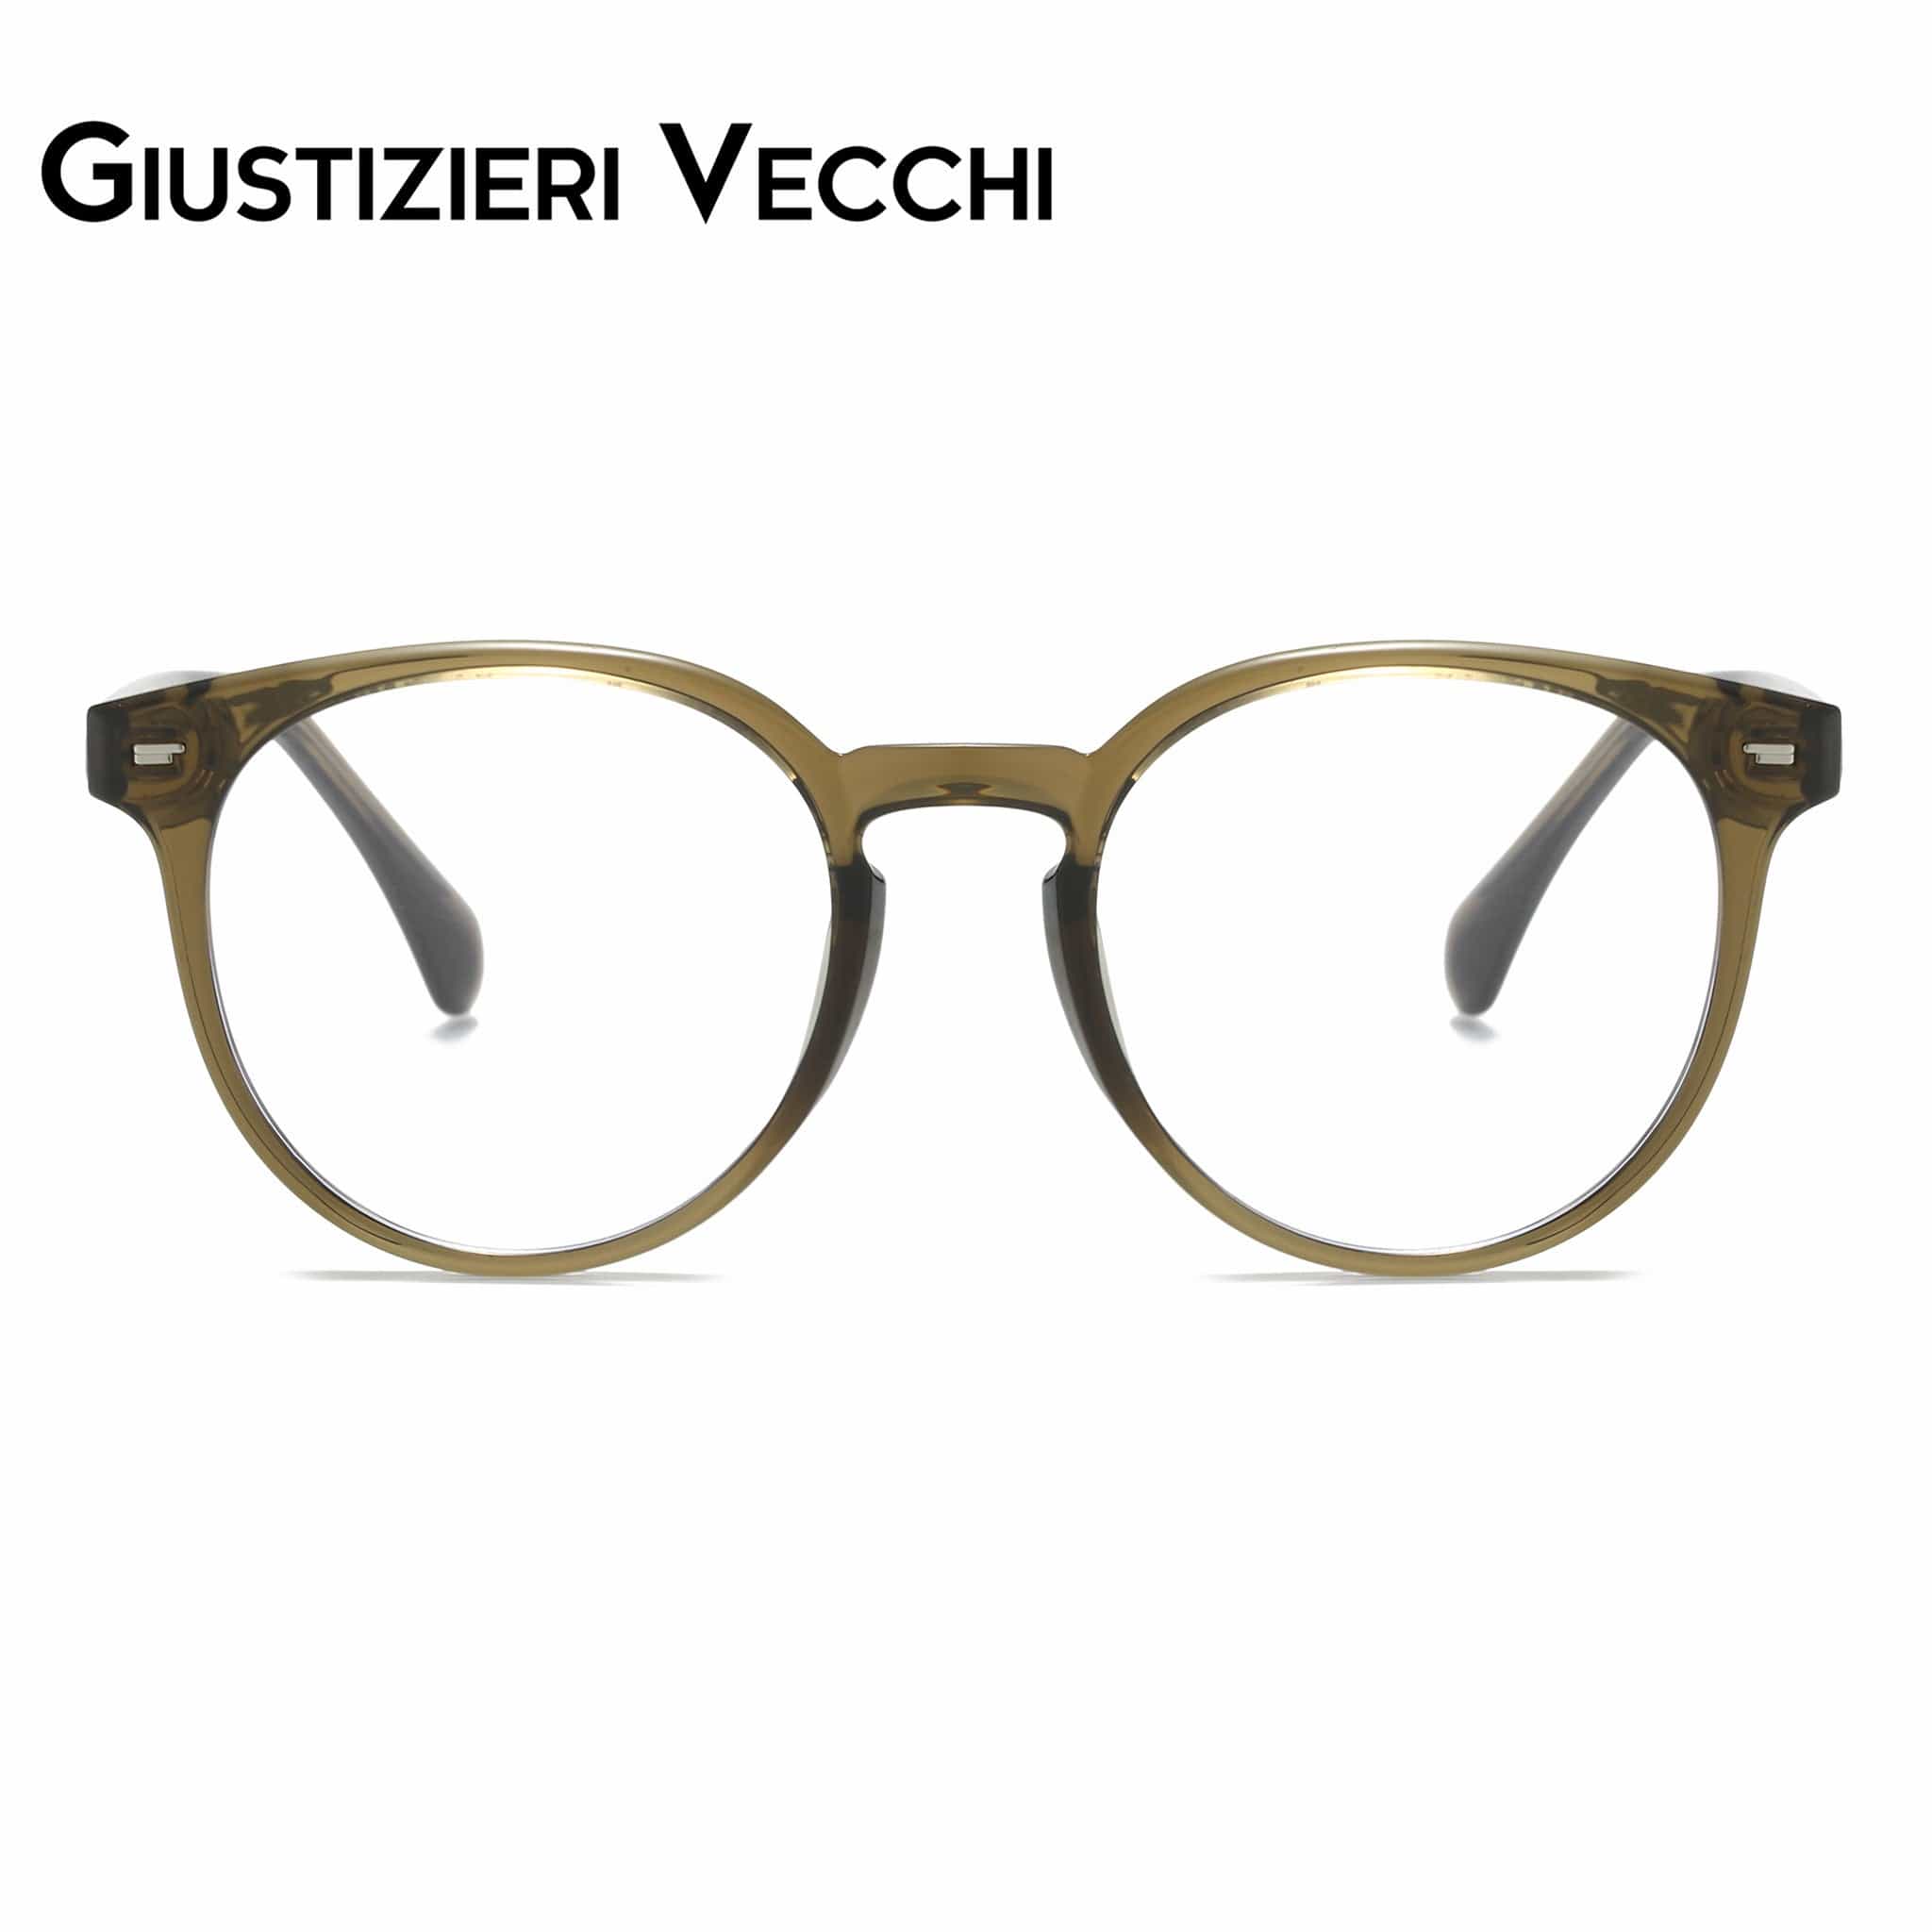 GIUSTIZIERI VECCHI Eyeglasses Small / Dark Beige Crystal NeonBloom Duo